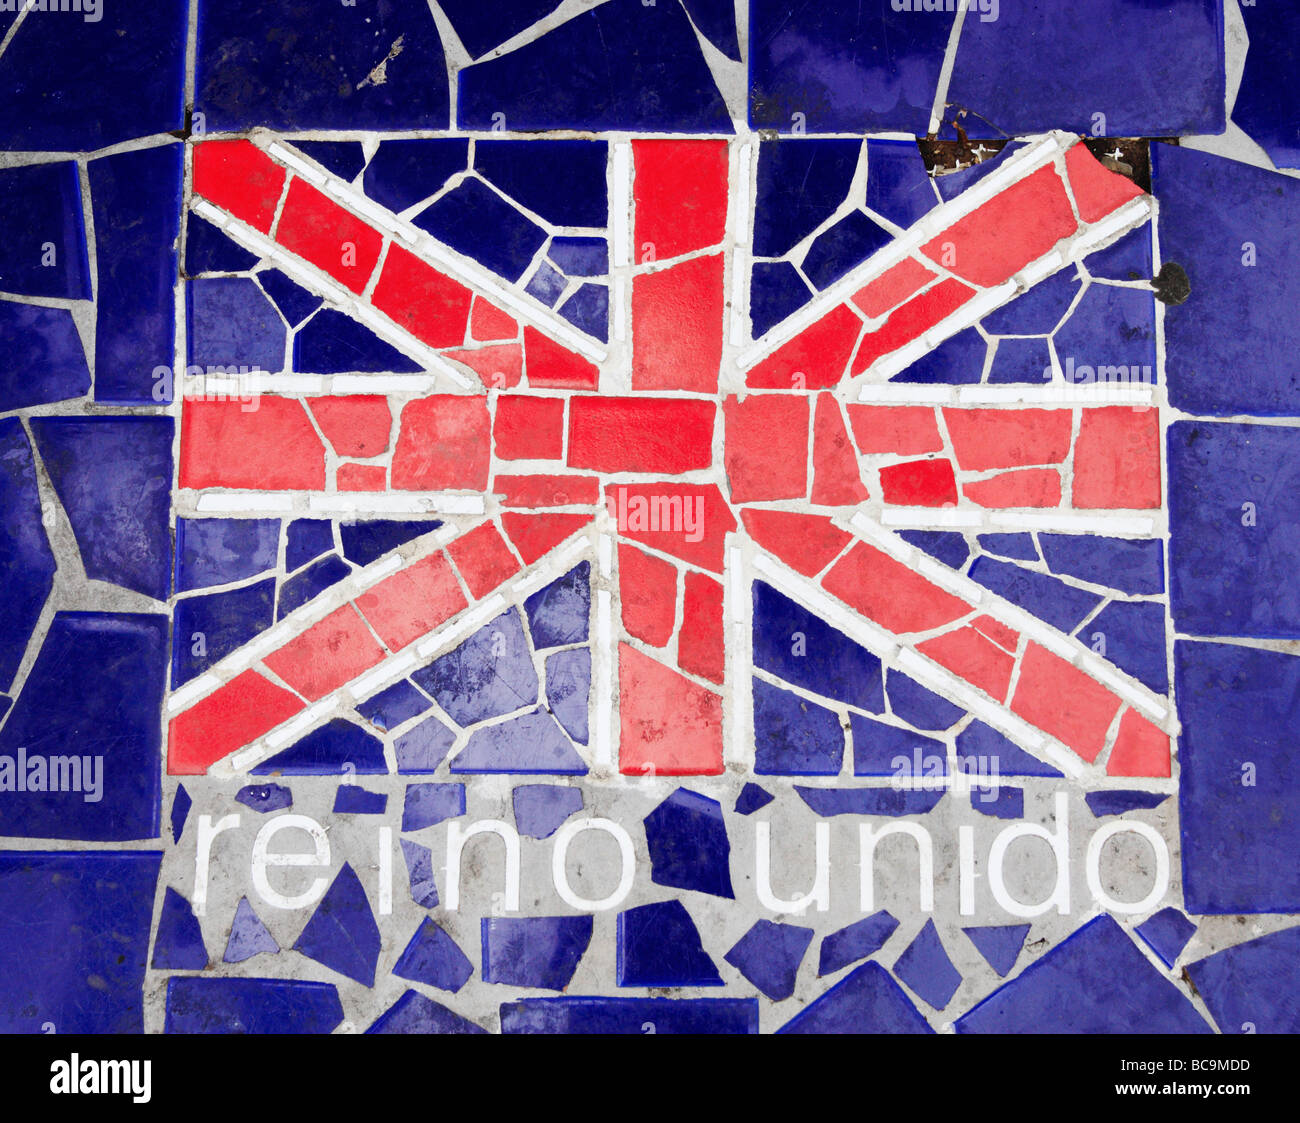 A mosaic United Kingdom (reino unido in Spanish) flag in park on Gran Canaria Stock Photo